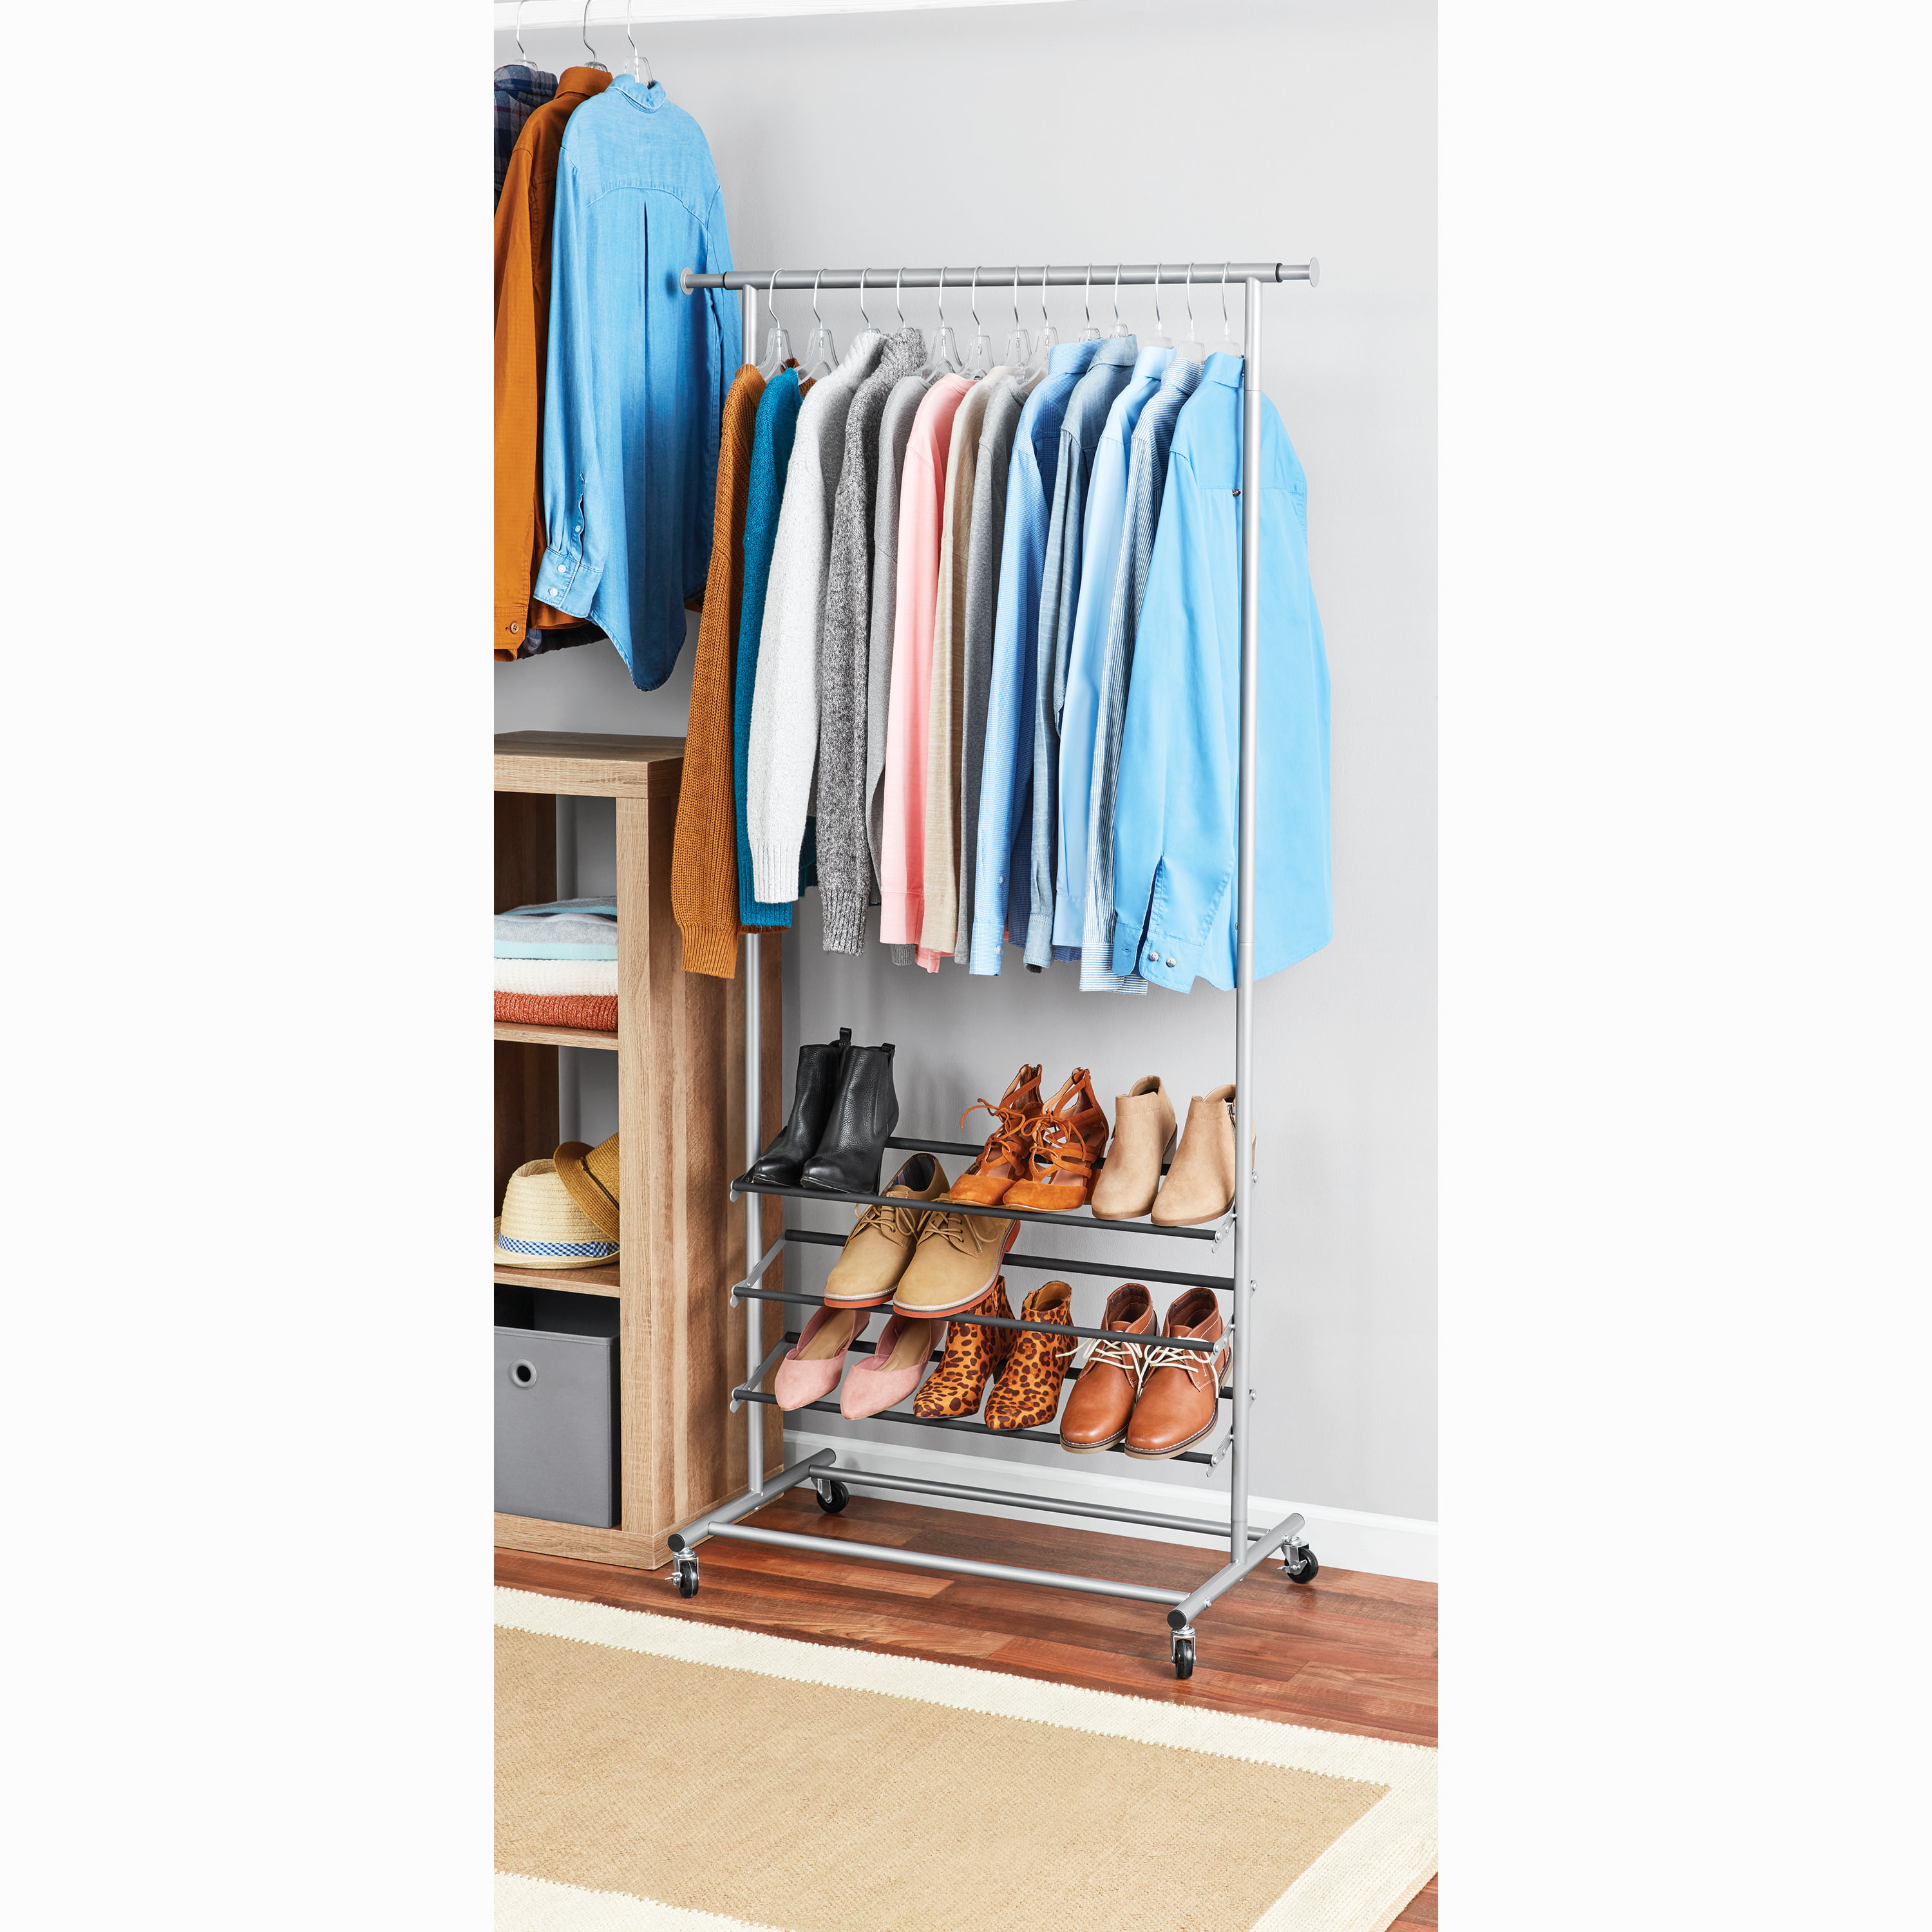 Mainstays 3-Tier Adjustable Storage Shelf